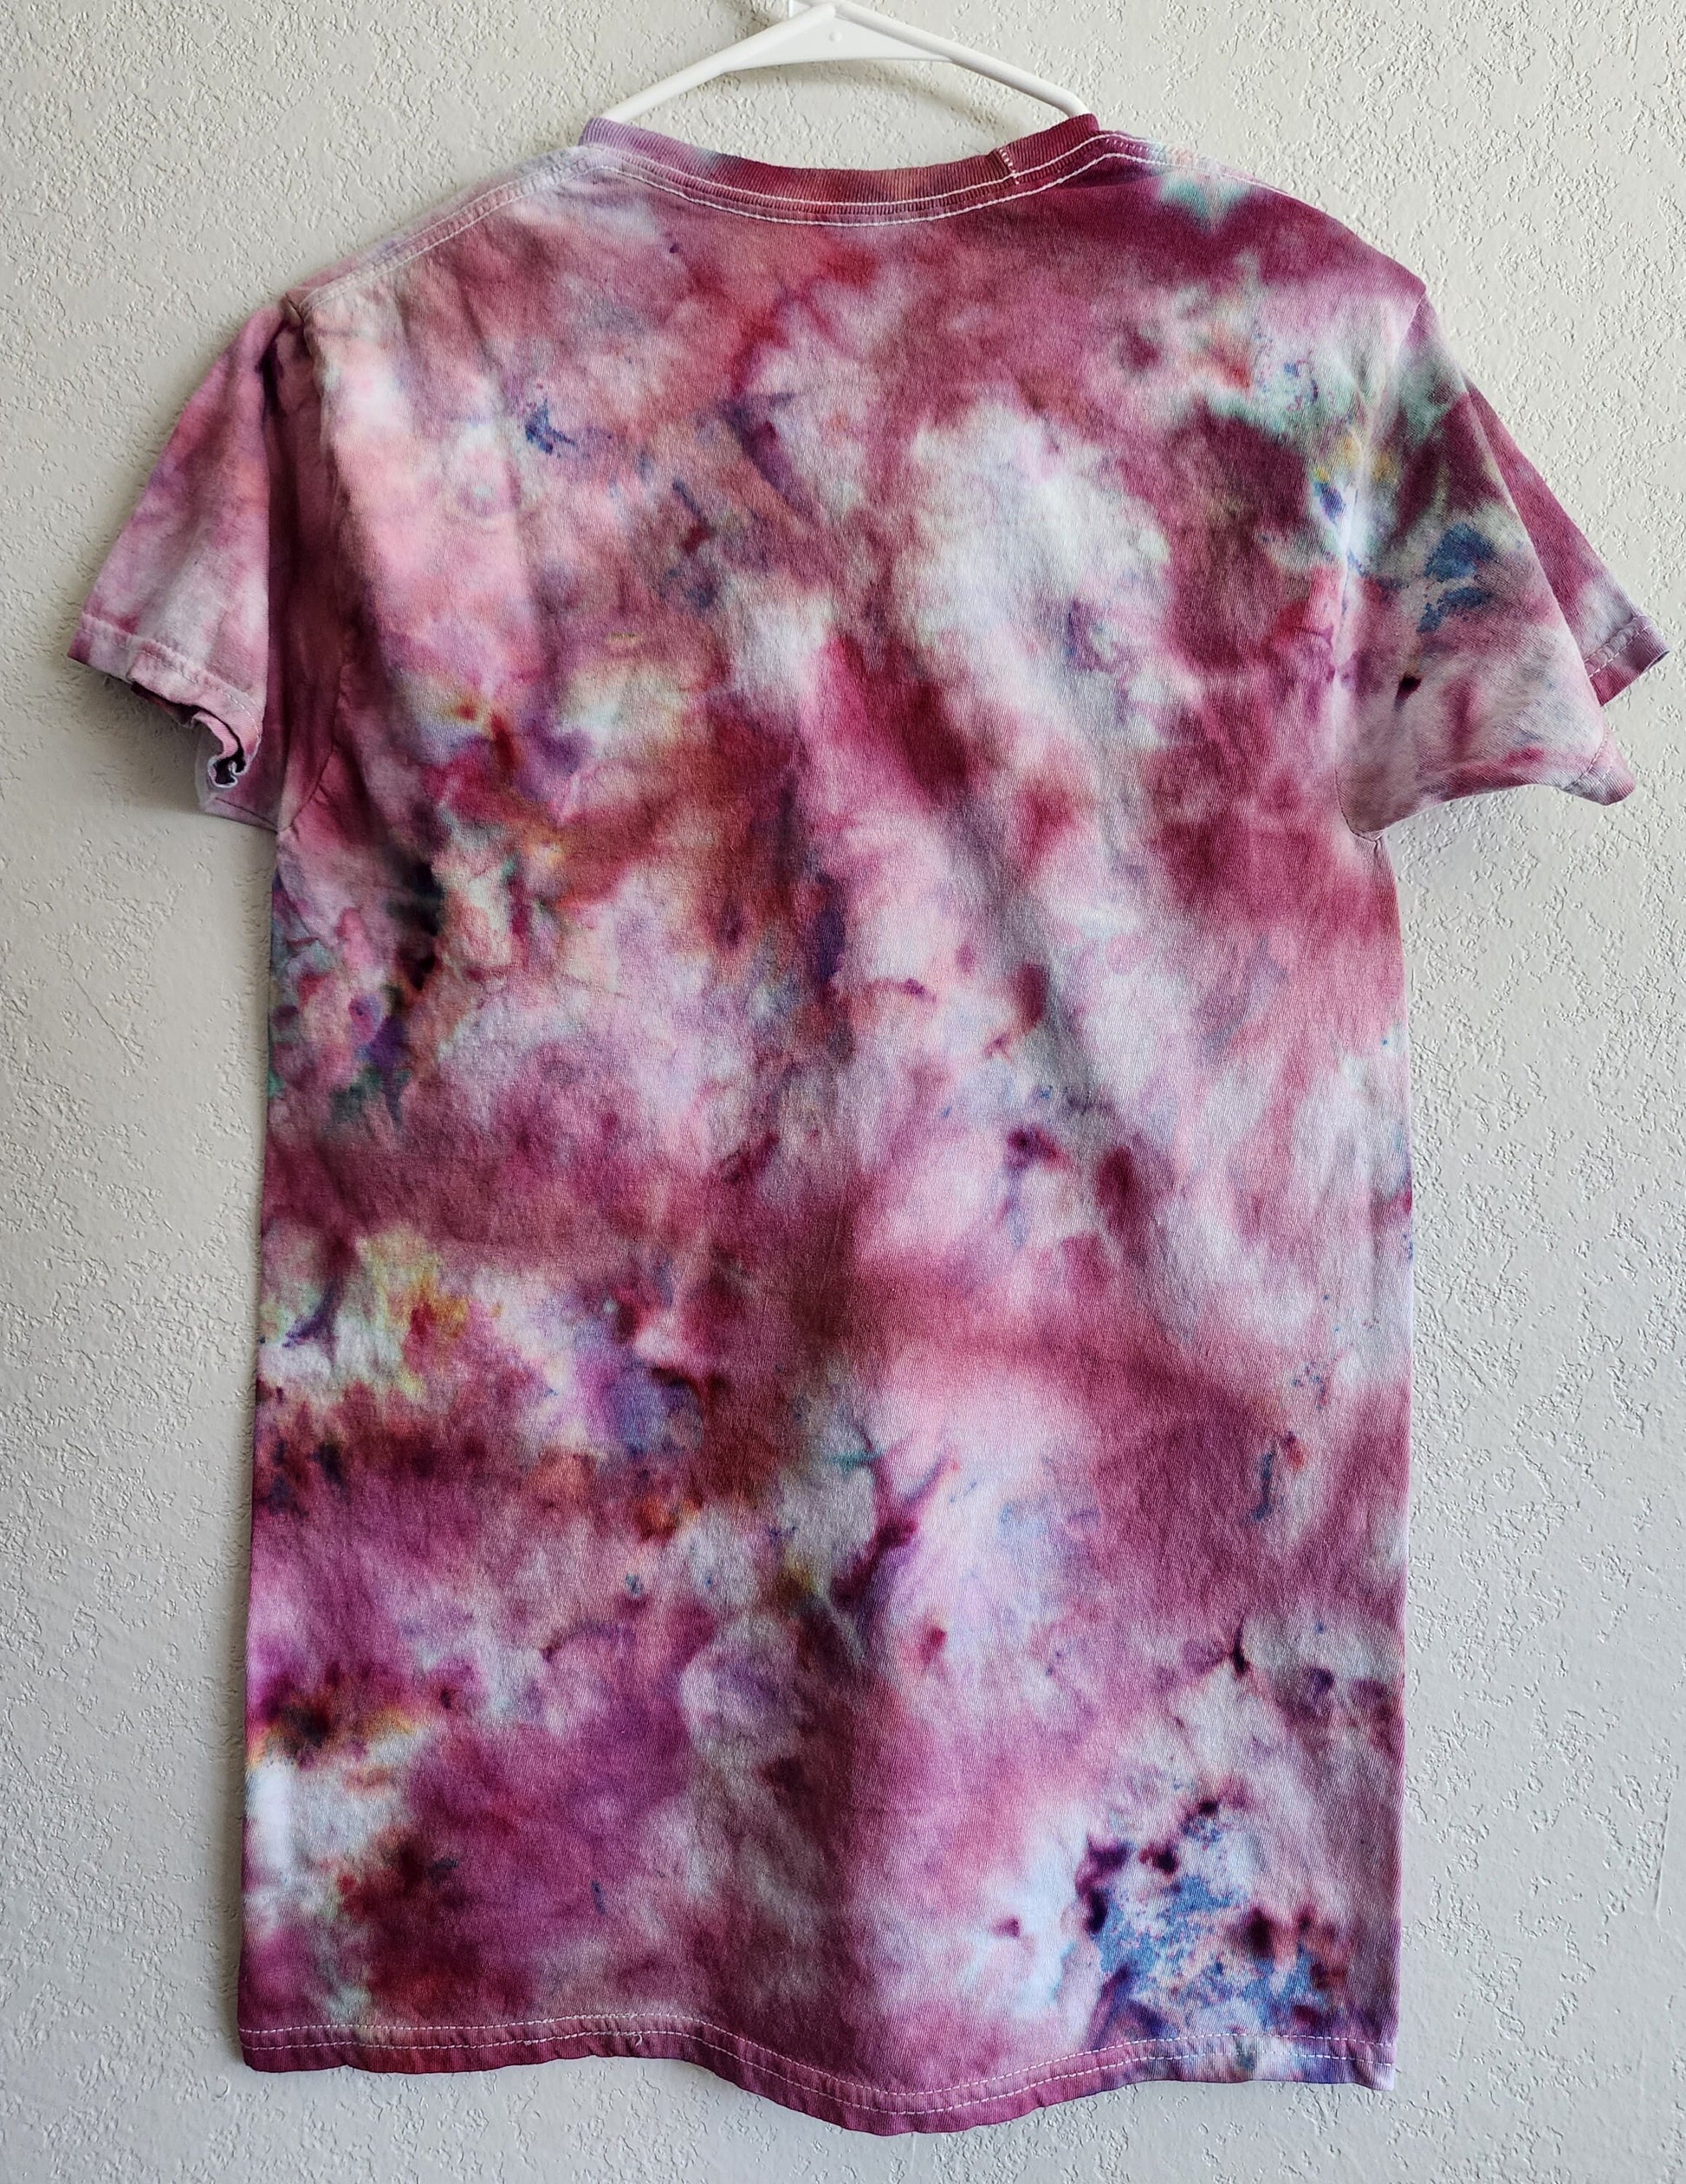 Dusty Rose Crumple Tie Dye T Shirt Customizable Unisex Size S